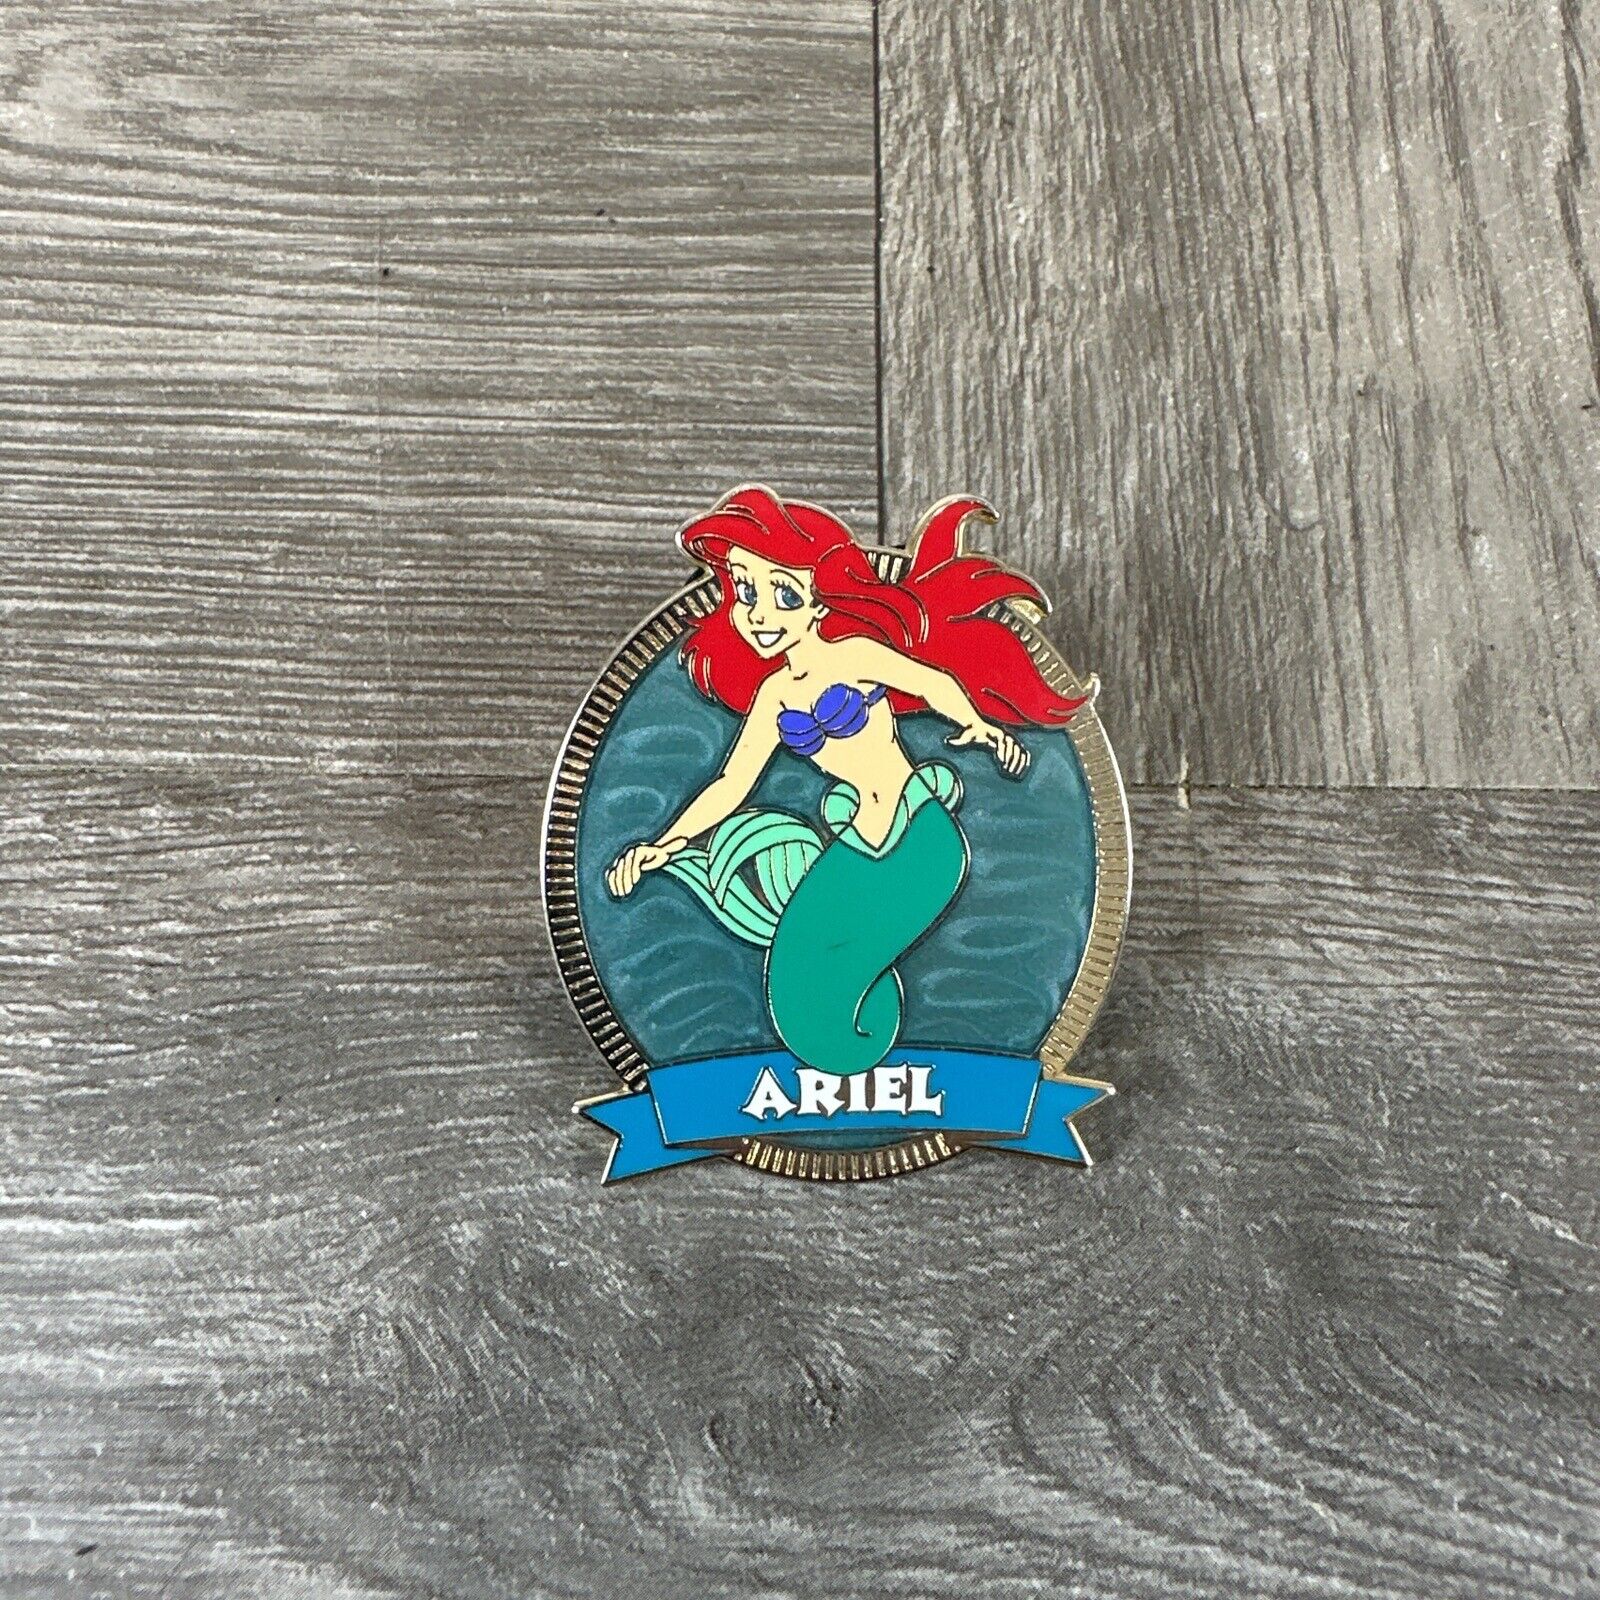 Disney Princess Swirl Series 2003 Ariel Little Mermaid Open Edition Pin #23942